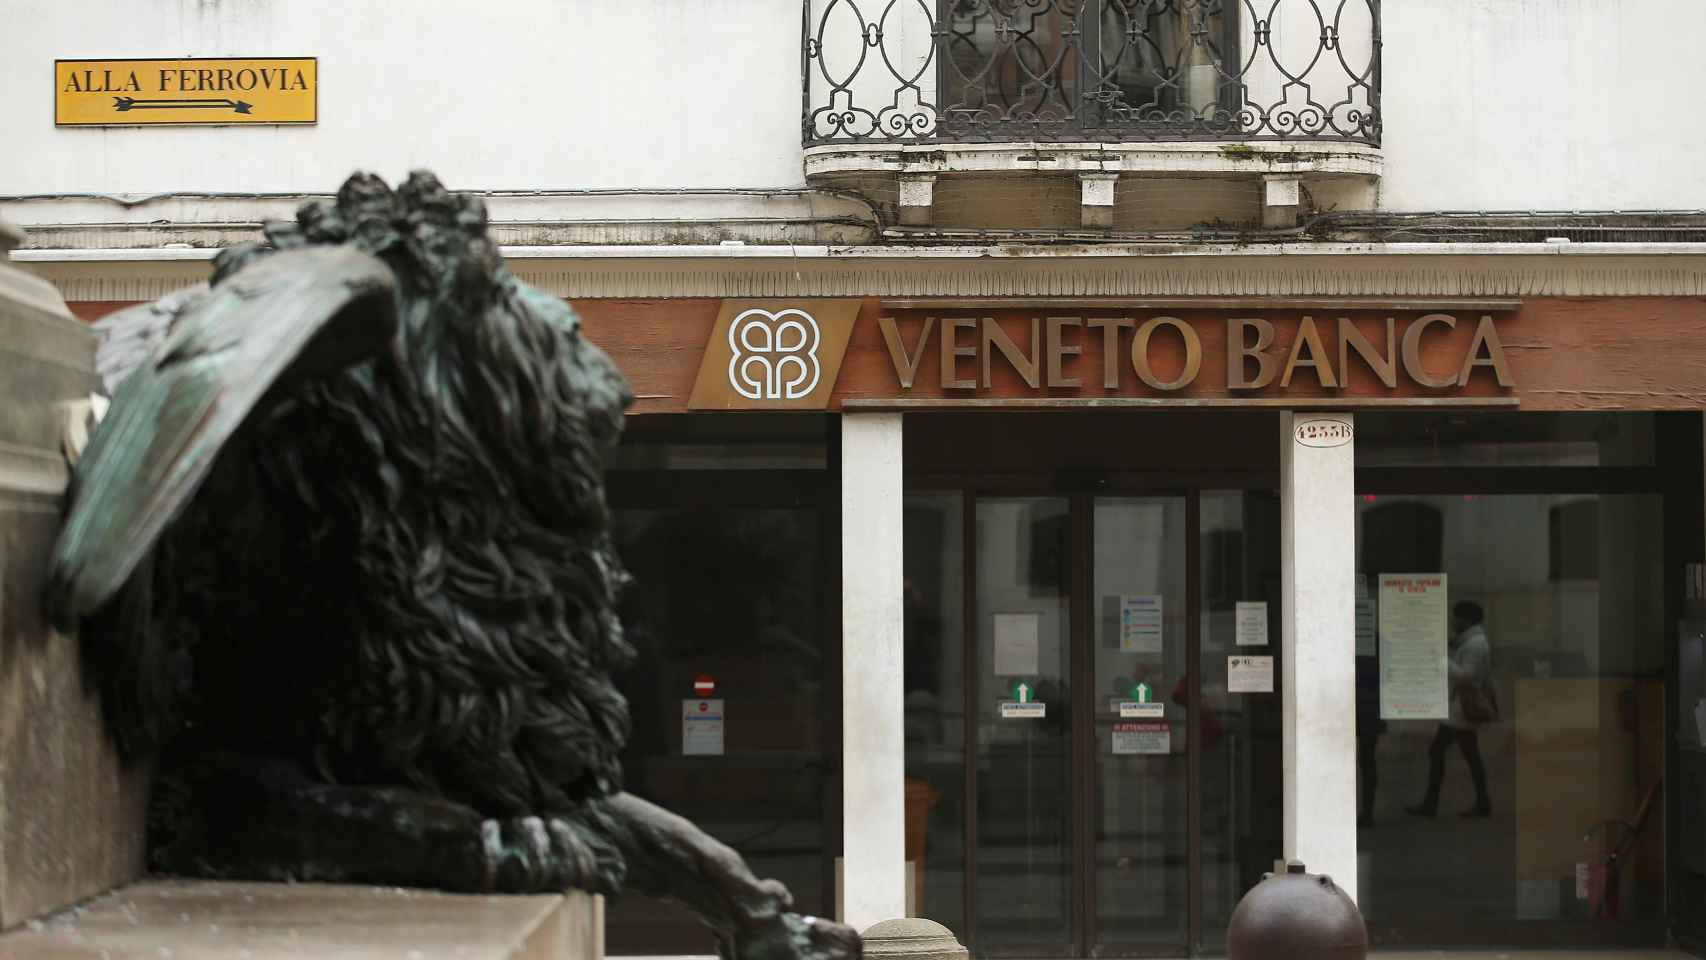 The logo of Veneto Banca bank is seen in Venice